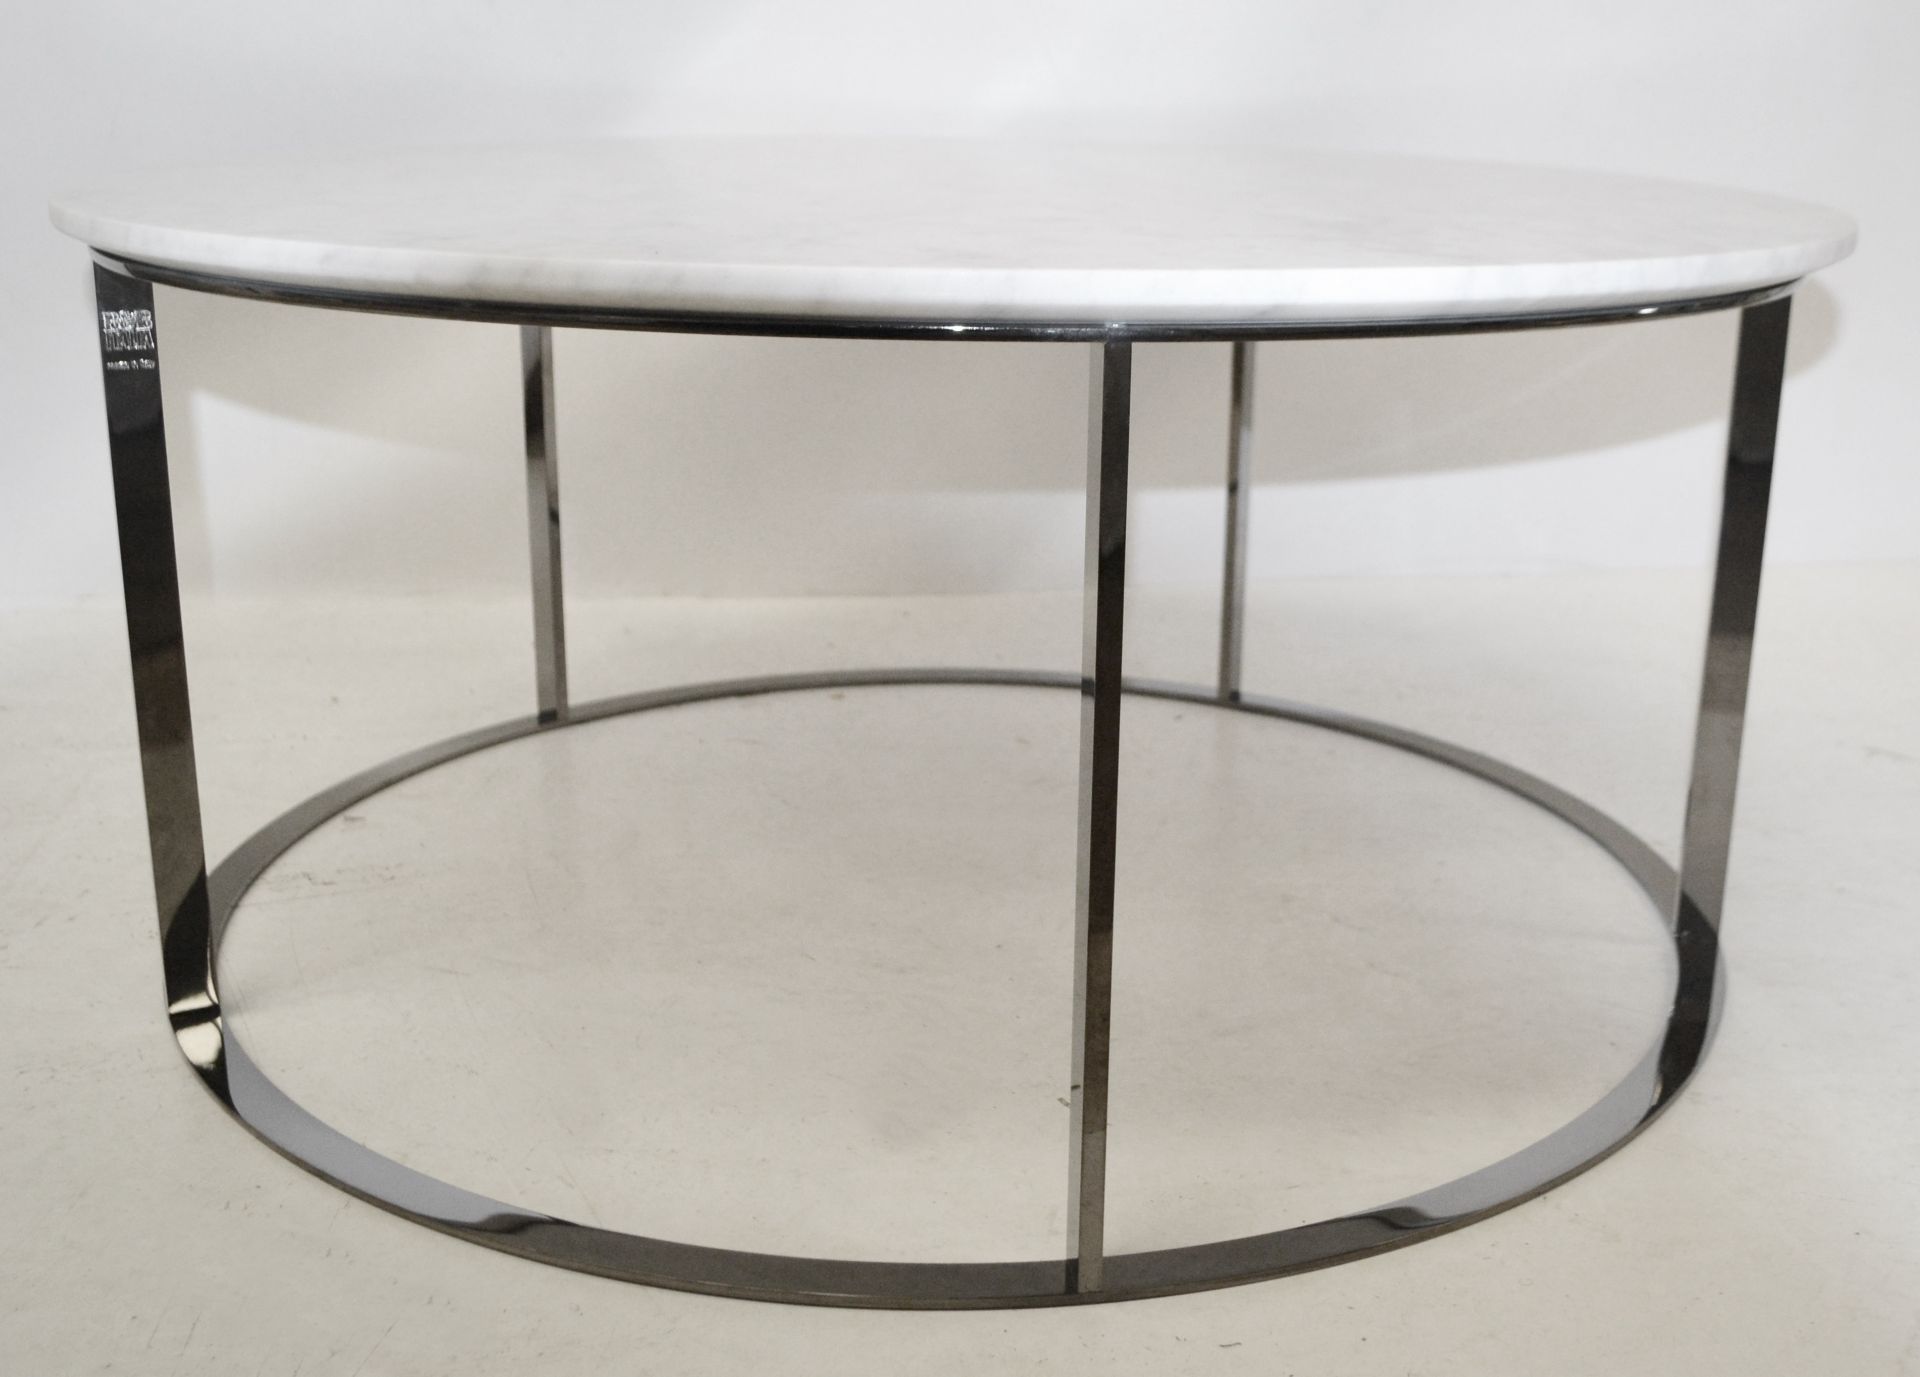 1 x B&B Italia 'MERA' White Marble Topped Designer Table (MTR90) - Designed By Antonio Citterio - Image 11 of 14